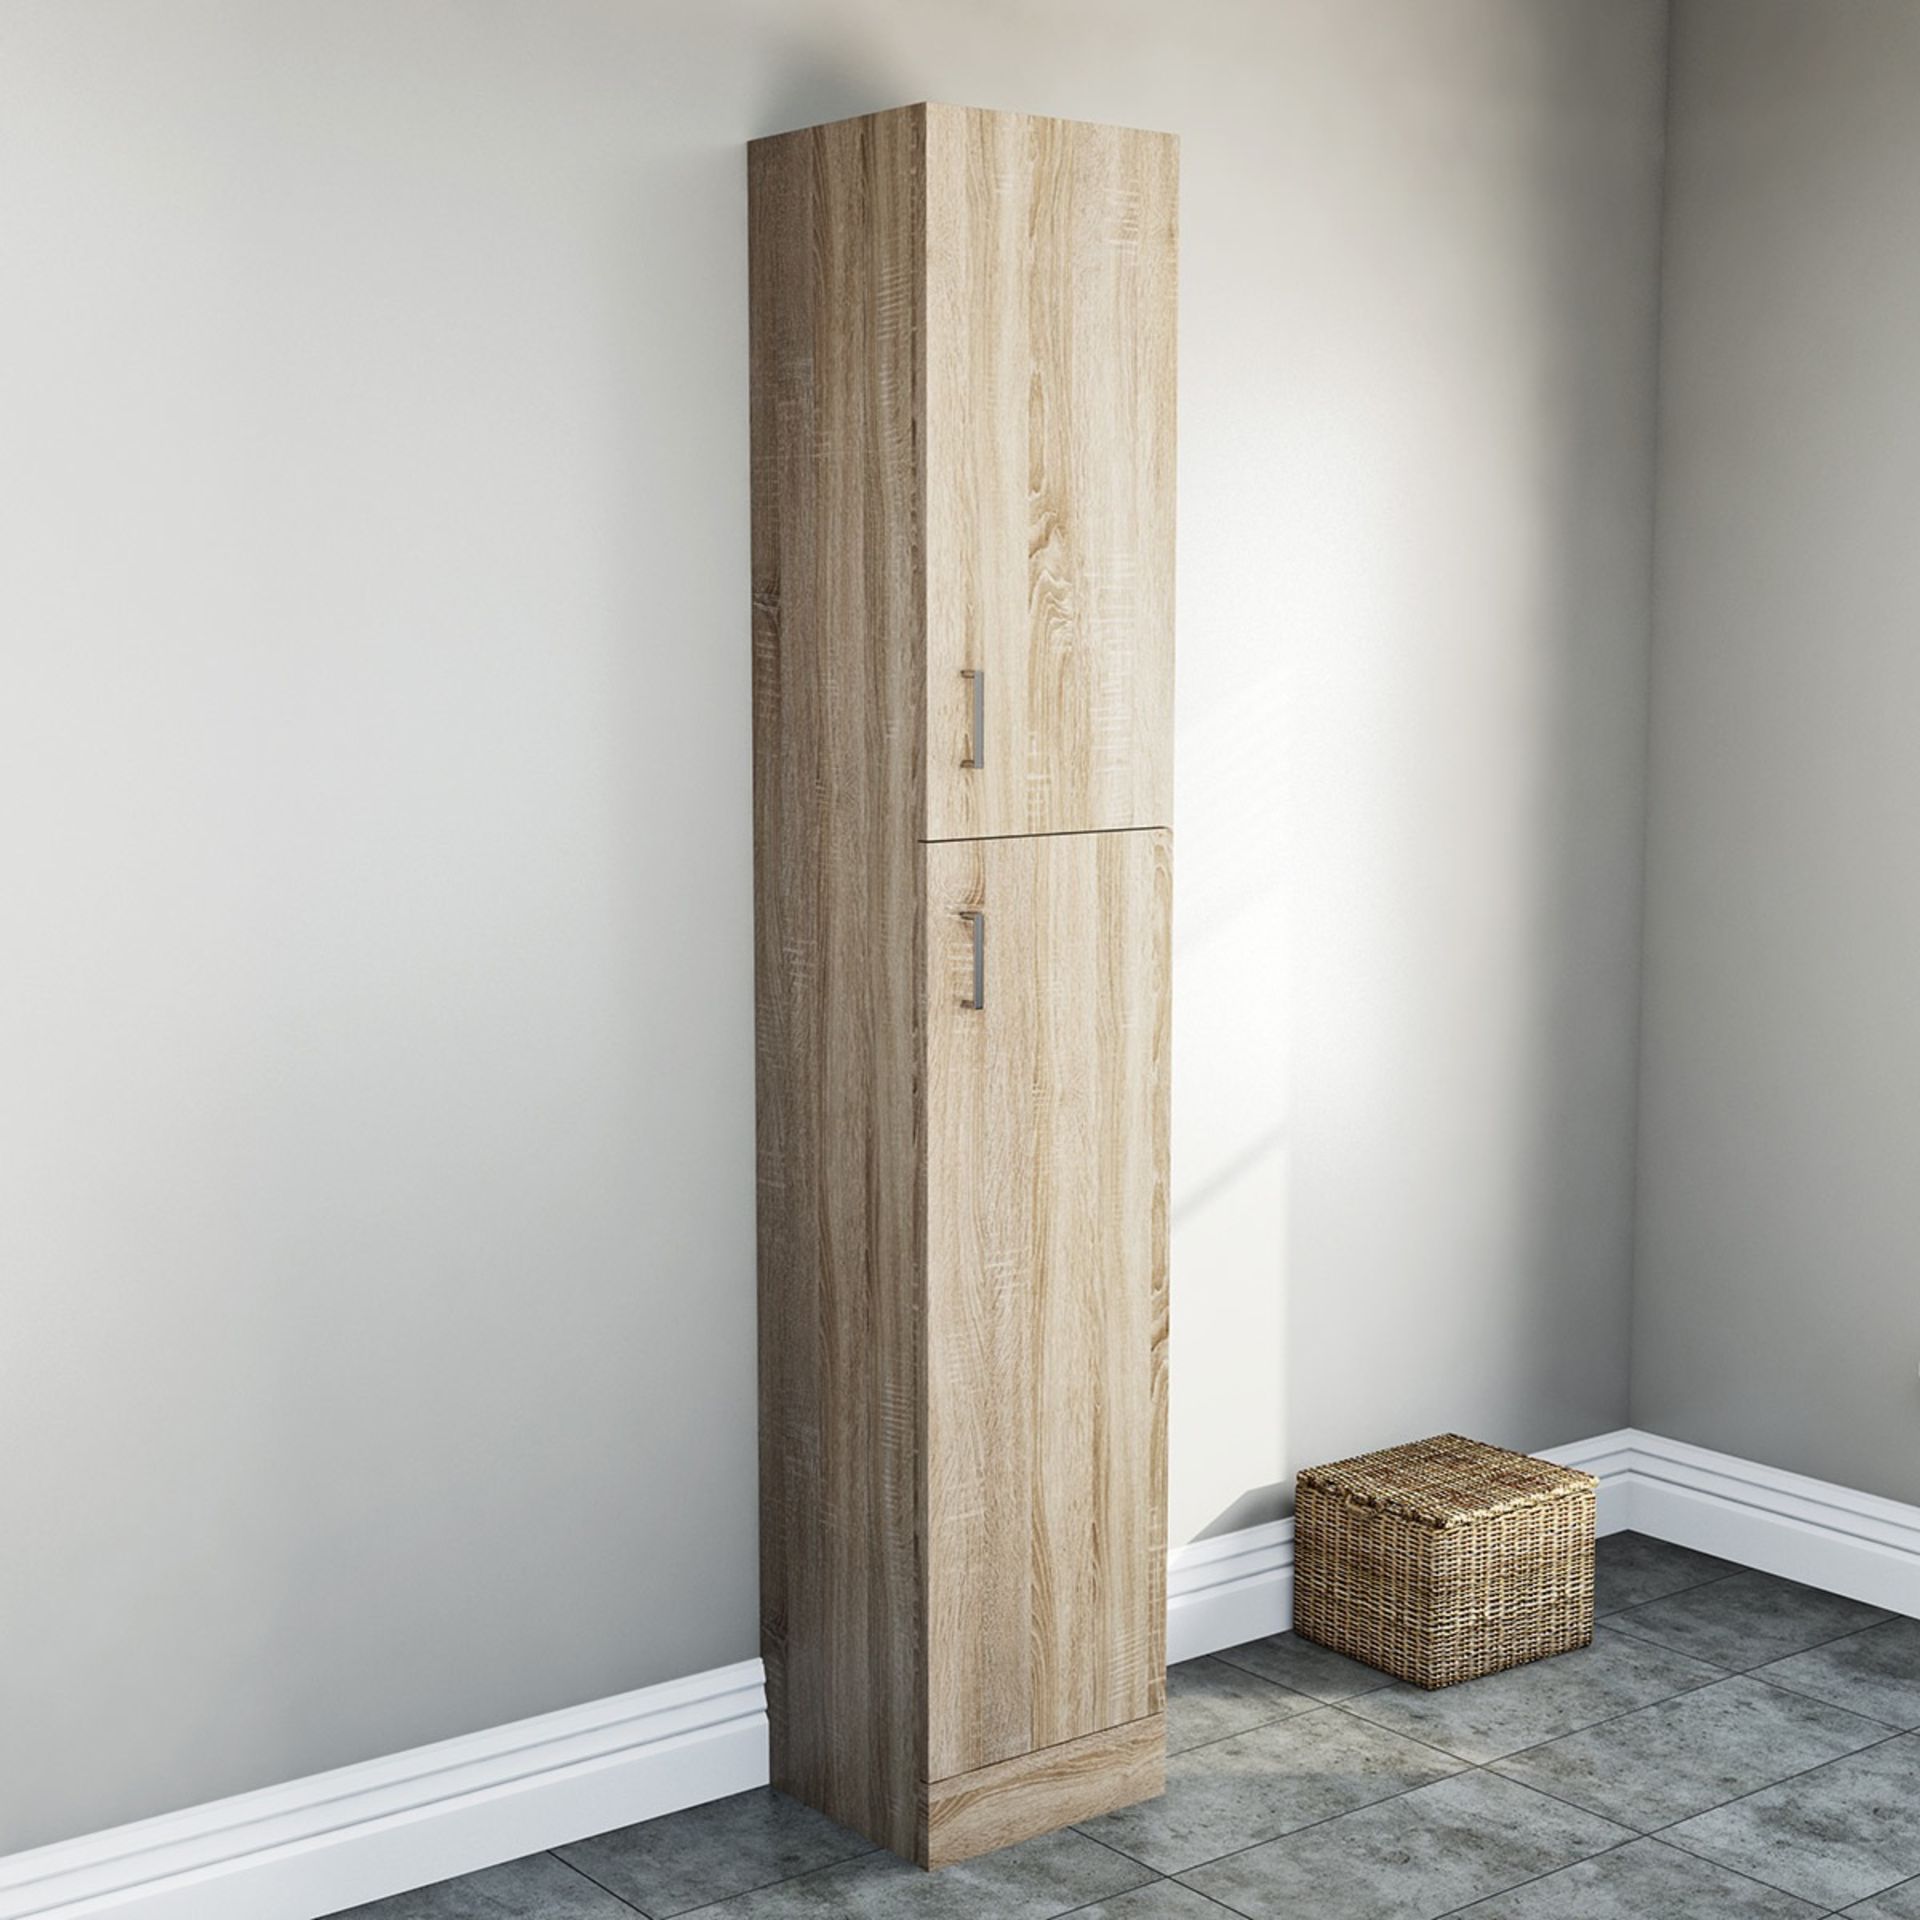 1 x Sienna Oak 300mm Tall Bathroom Storage Unit - Unused Stock - CL190 - Ref BR067 - Location: - Image 5 of 5